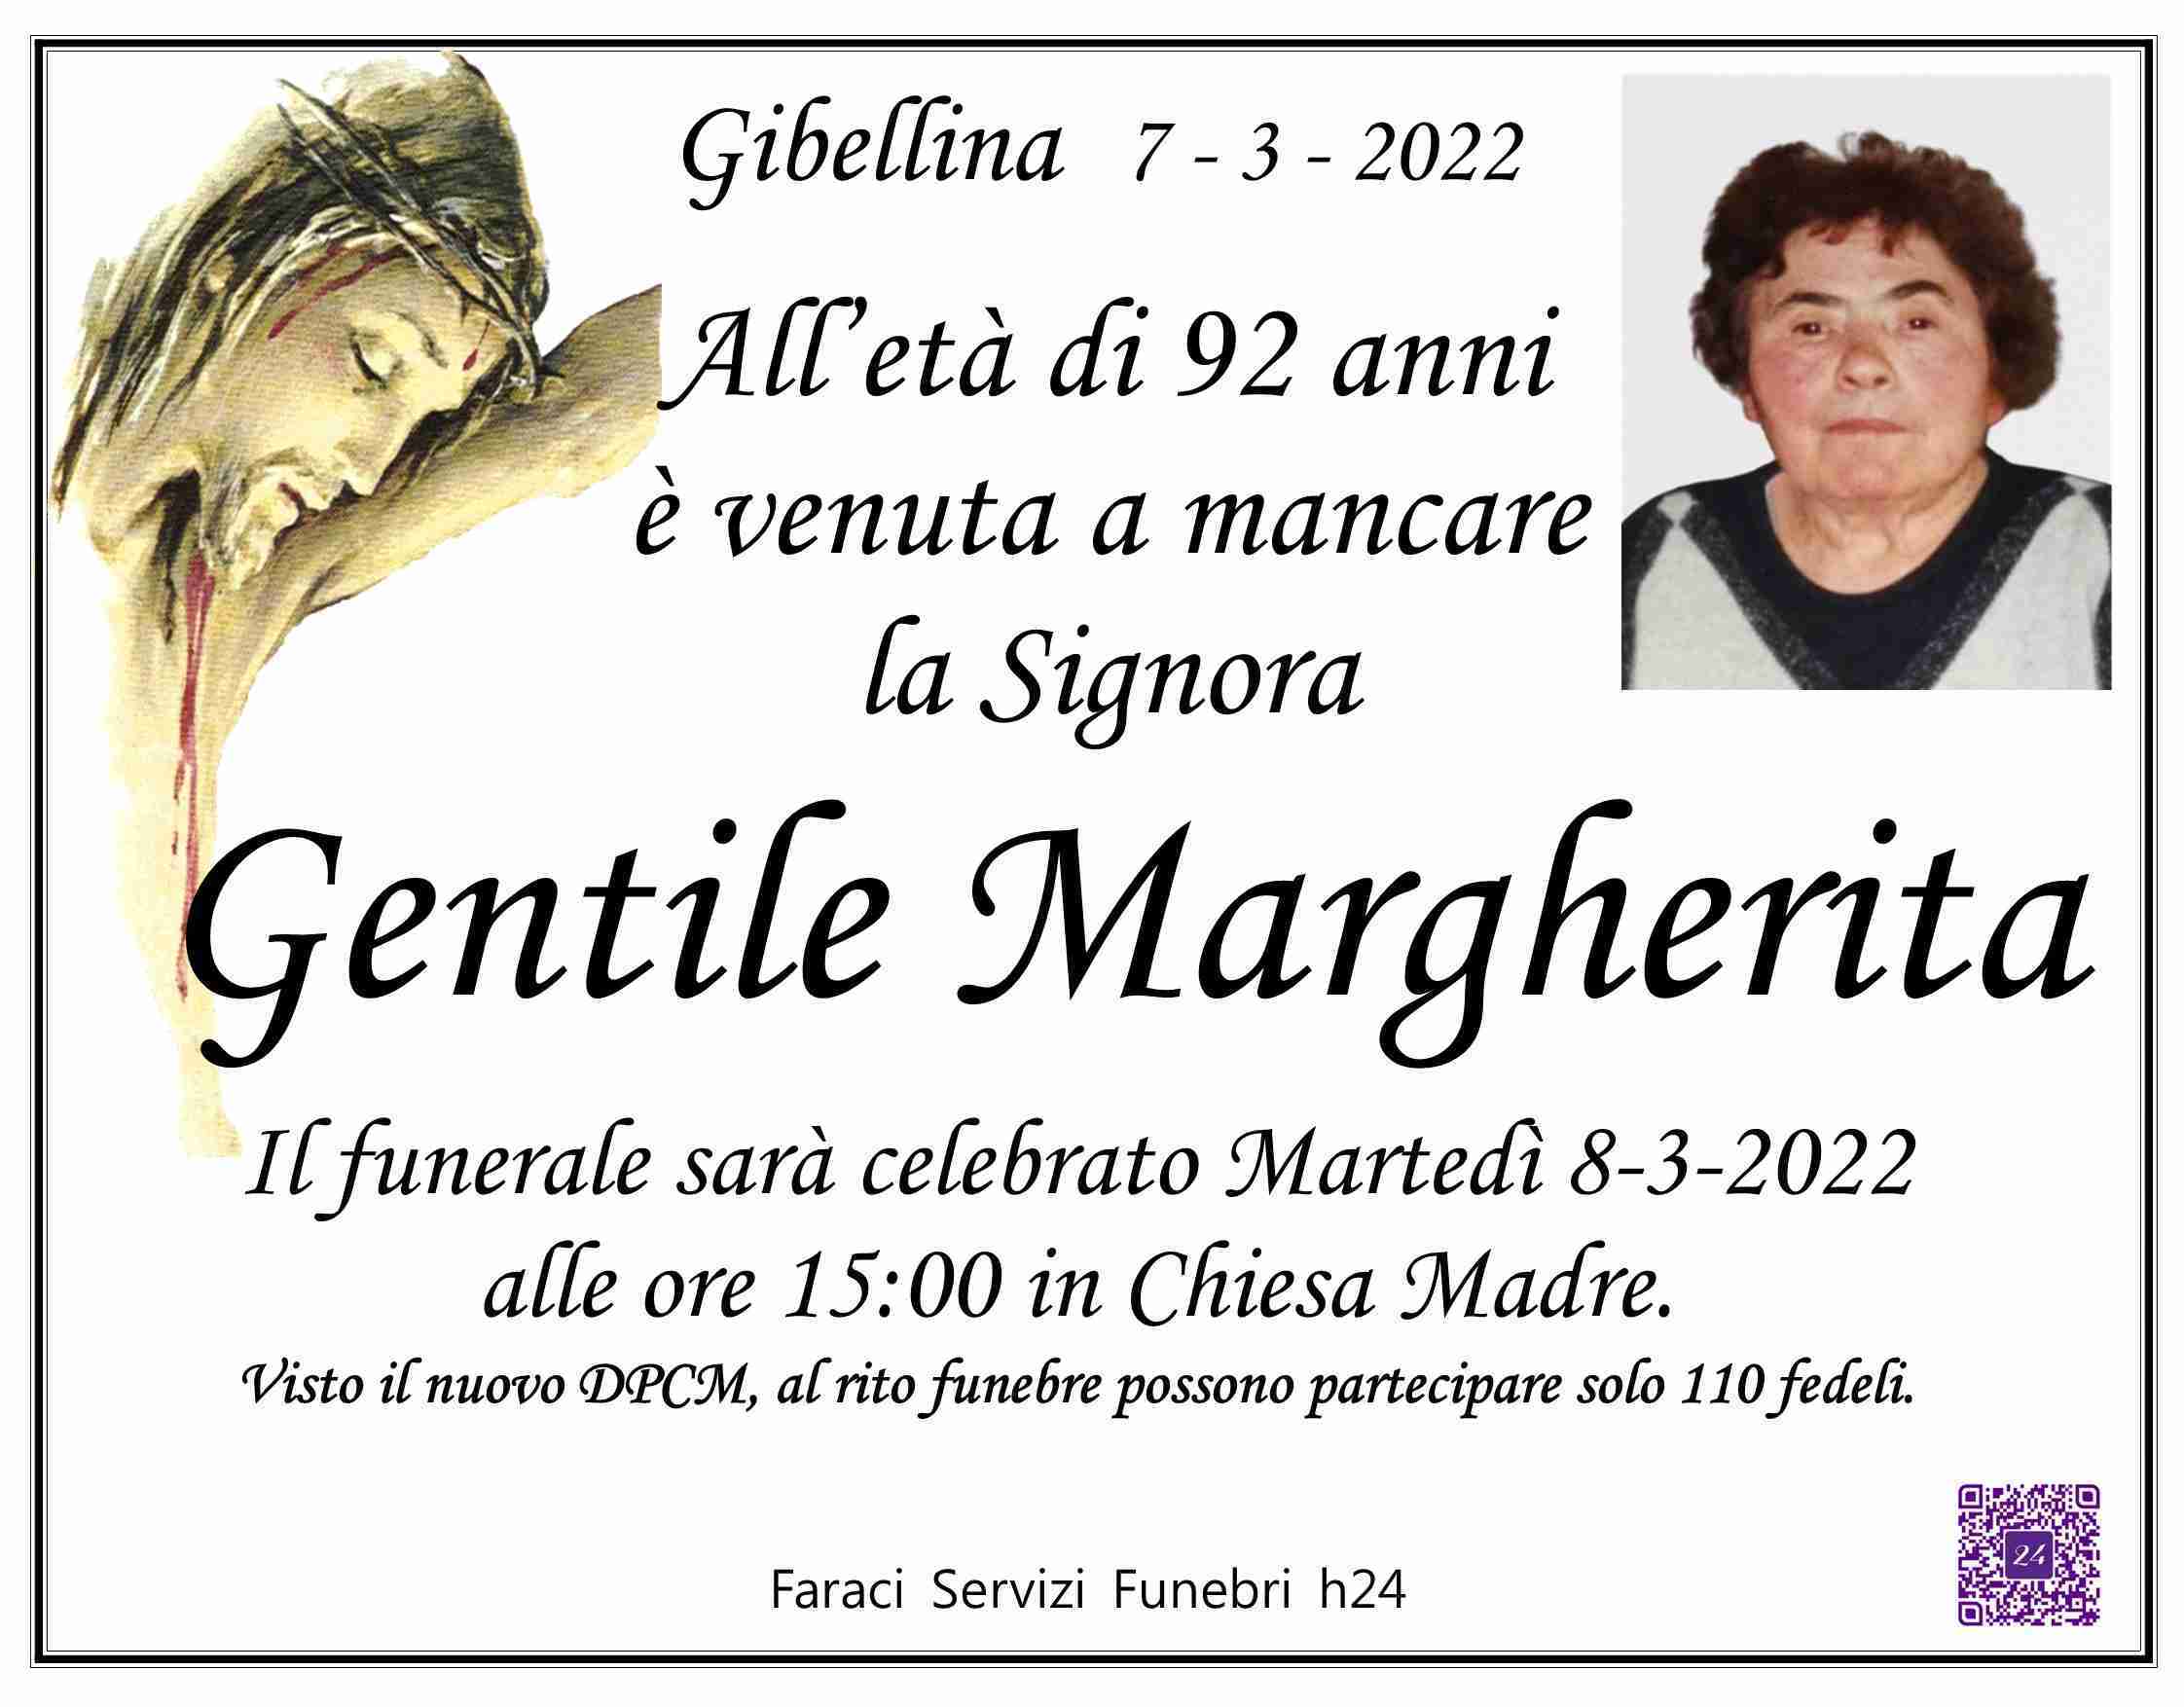 Margherita Gentile